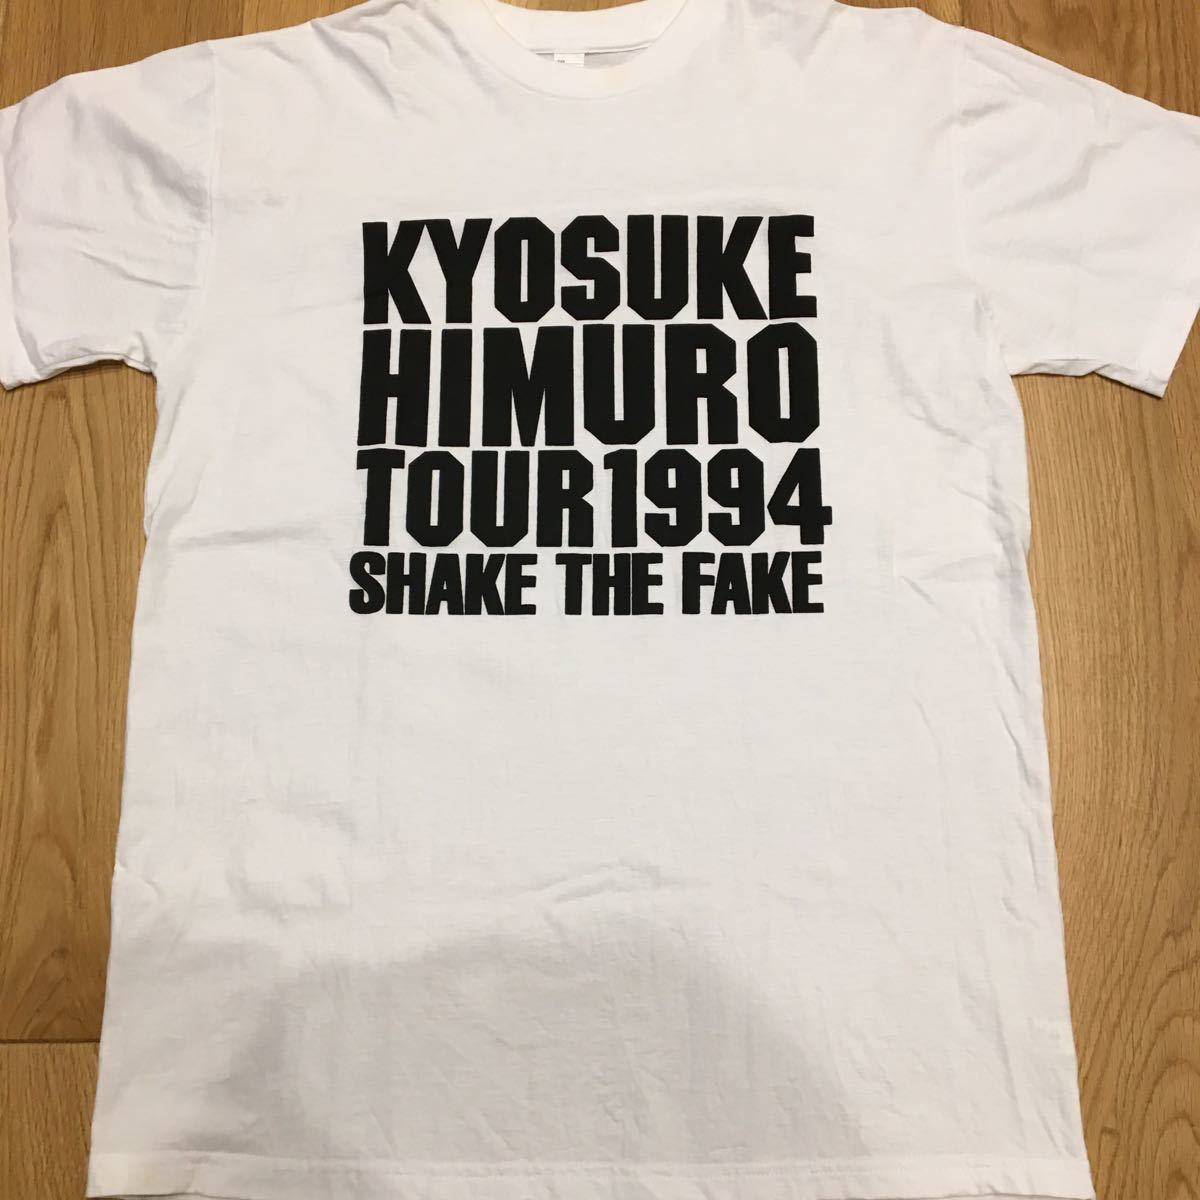  не использовался редкость Himuro Kyosuke SHAKE THE FAKE TOUR 1994 футболка L размер 